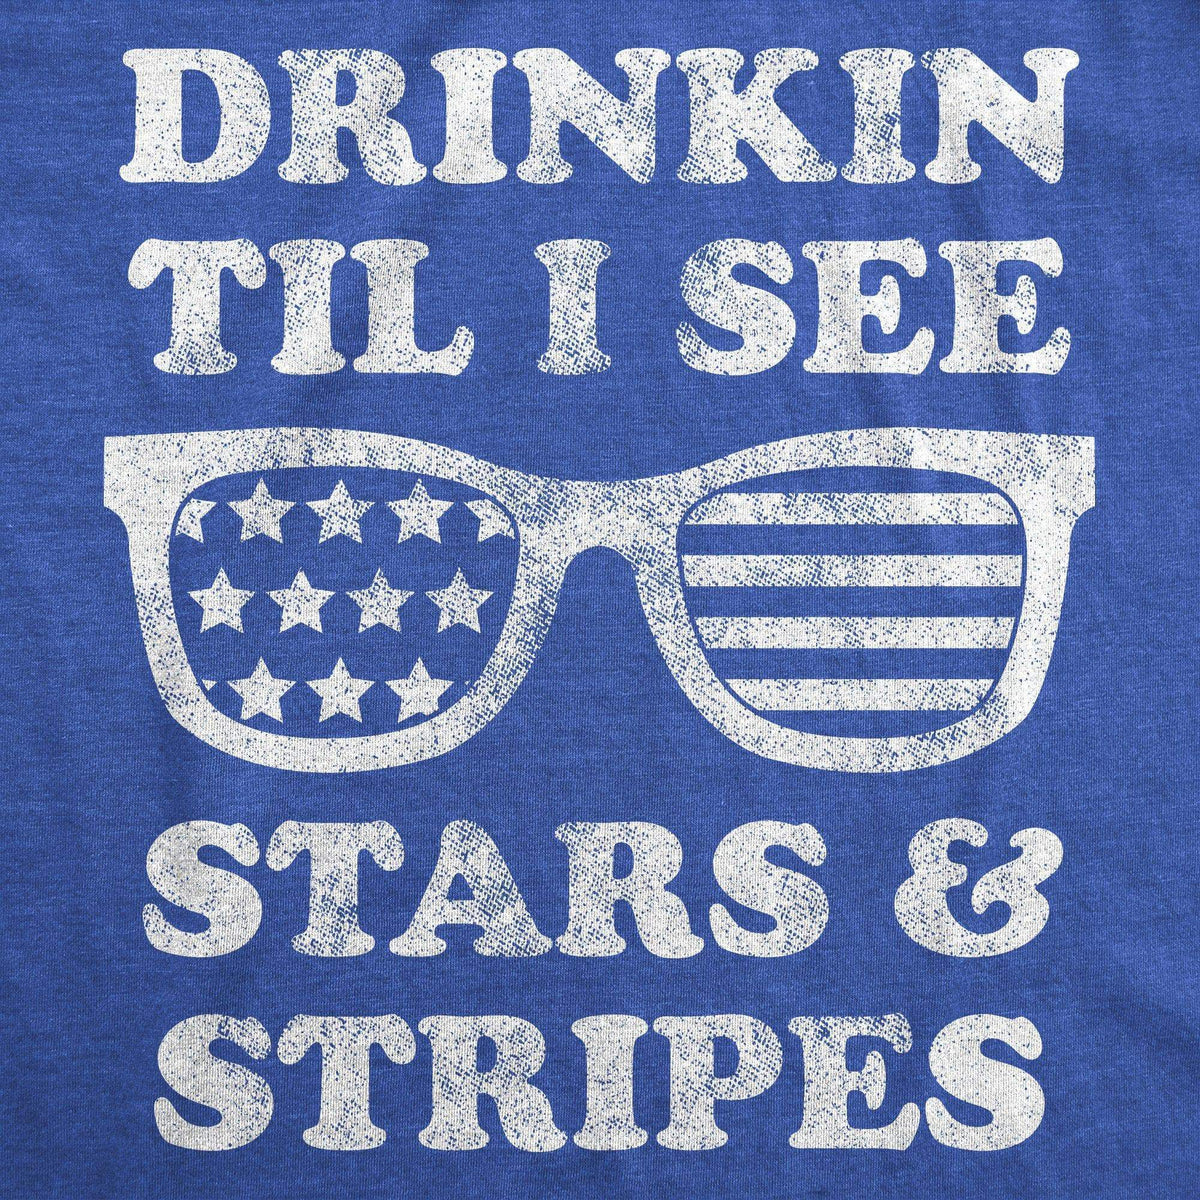 Drinkin Til I See Stars And Stripes Women&#39;s Tshirt - Crazy Dog T-Shirts